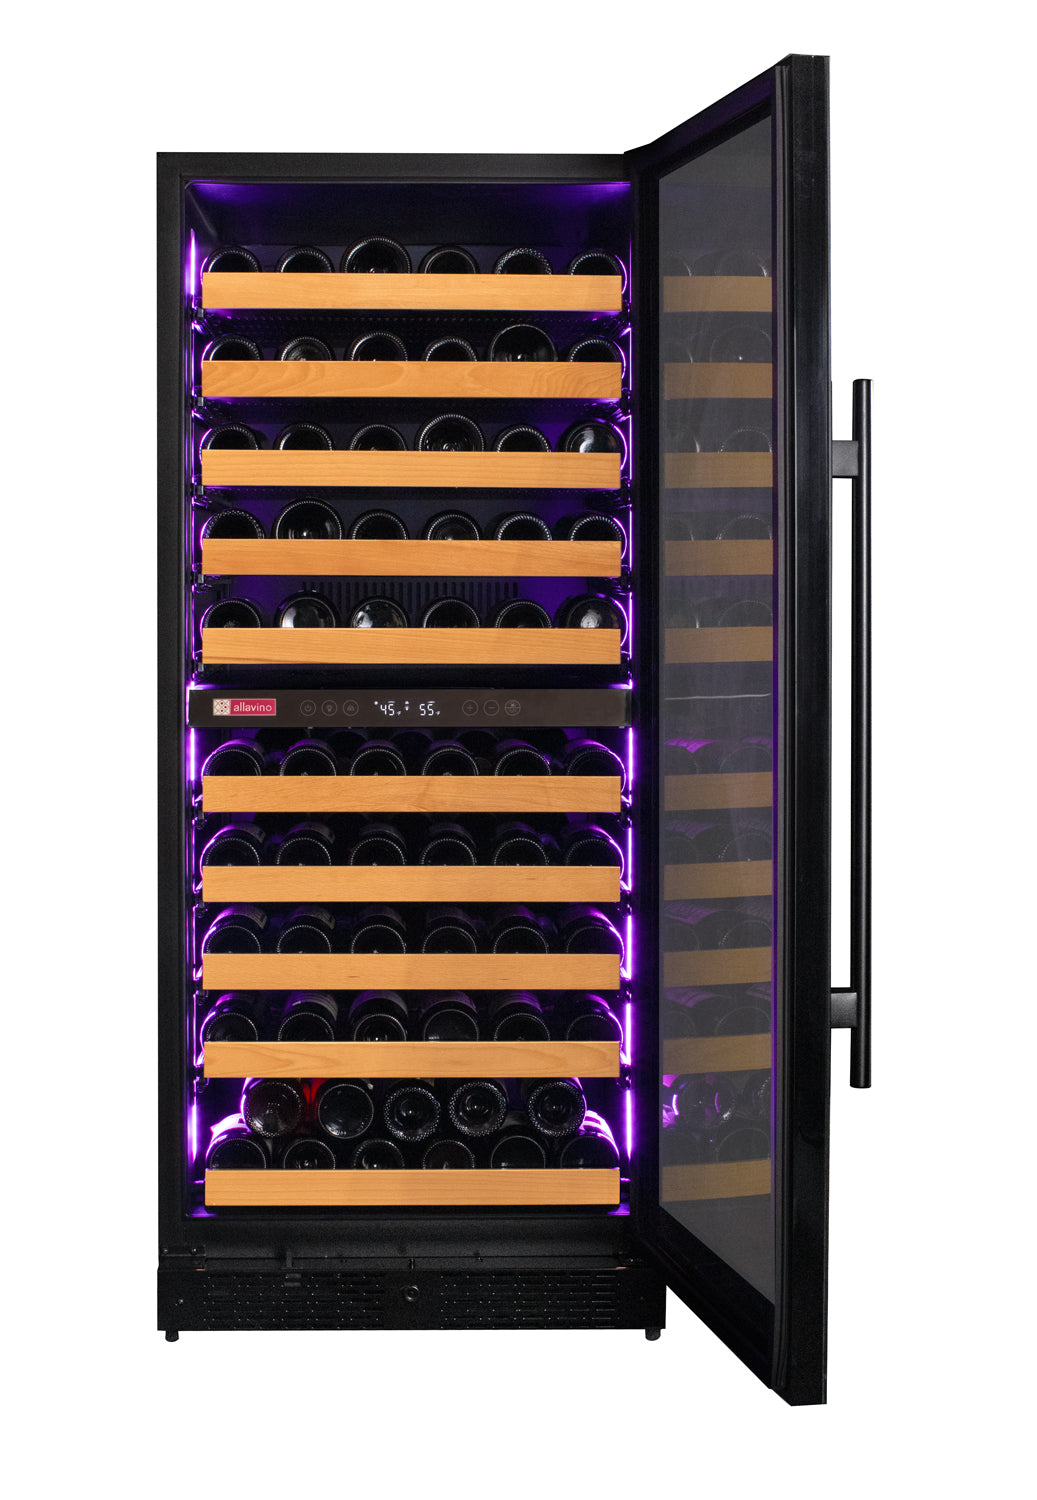 Allavino Reserva Series 119 Bottle 55" Tall Dual Zone Right Hinge Black Glass Wine Refrigerator